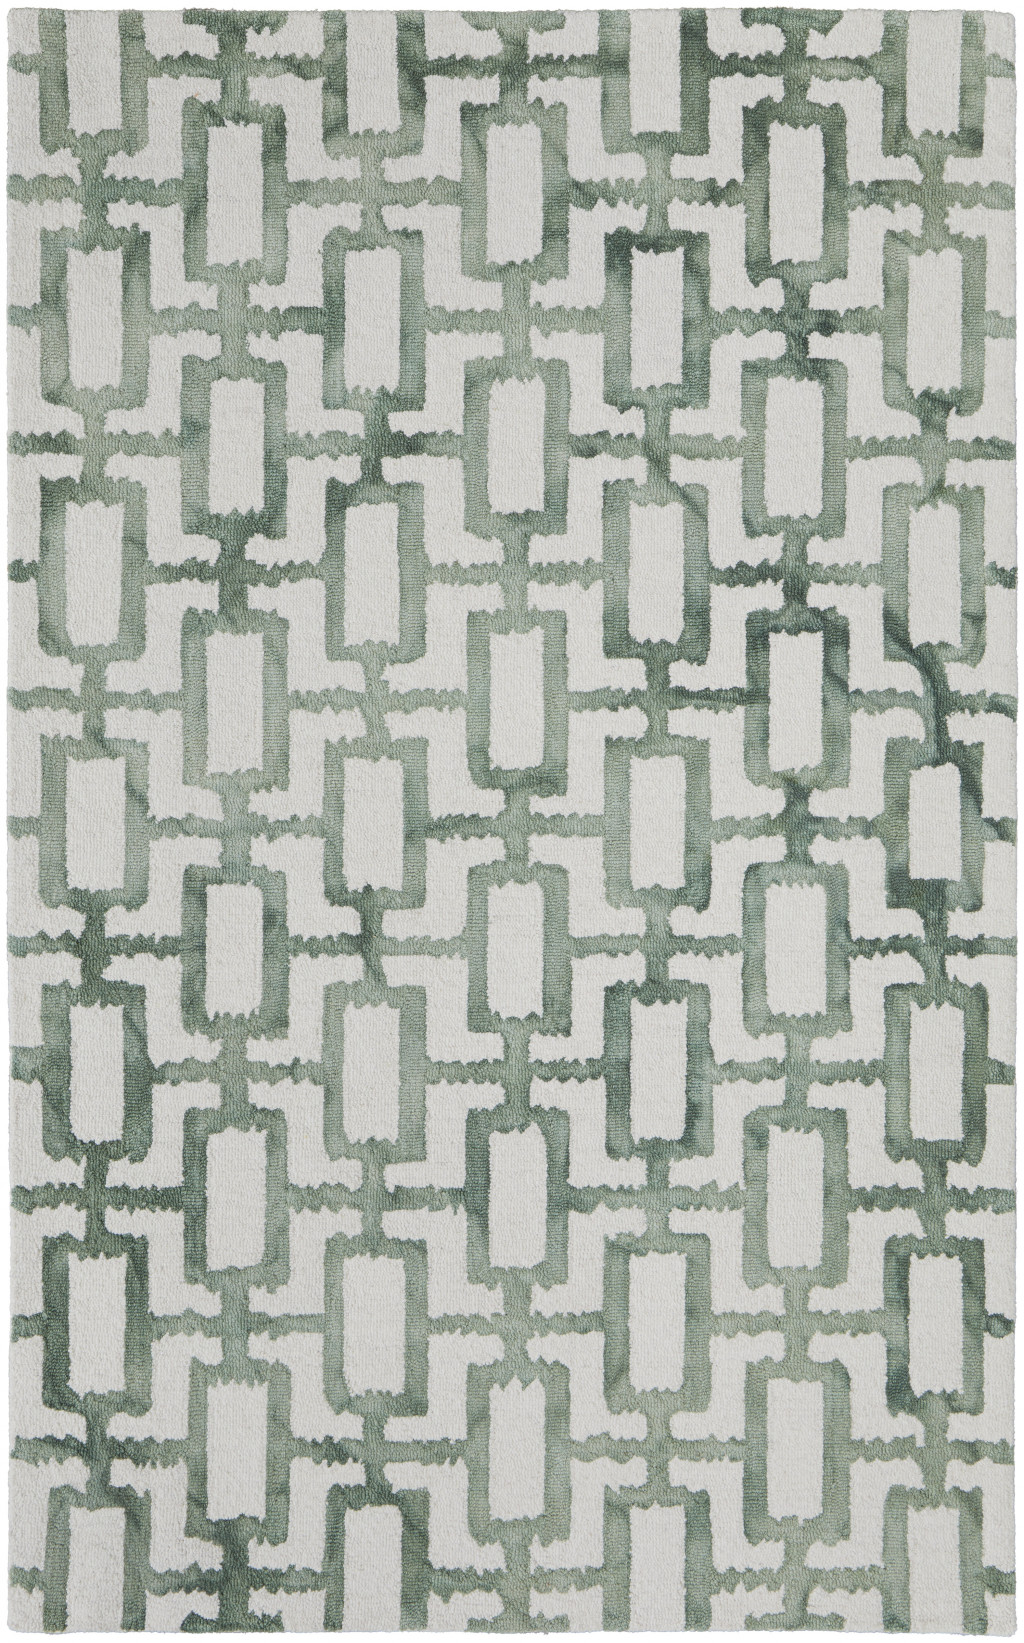 2' X 3' Ivory And Green Wool Geometric Tufted Handmade Area Rug-511103-1